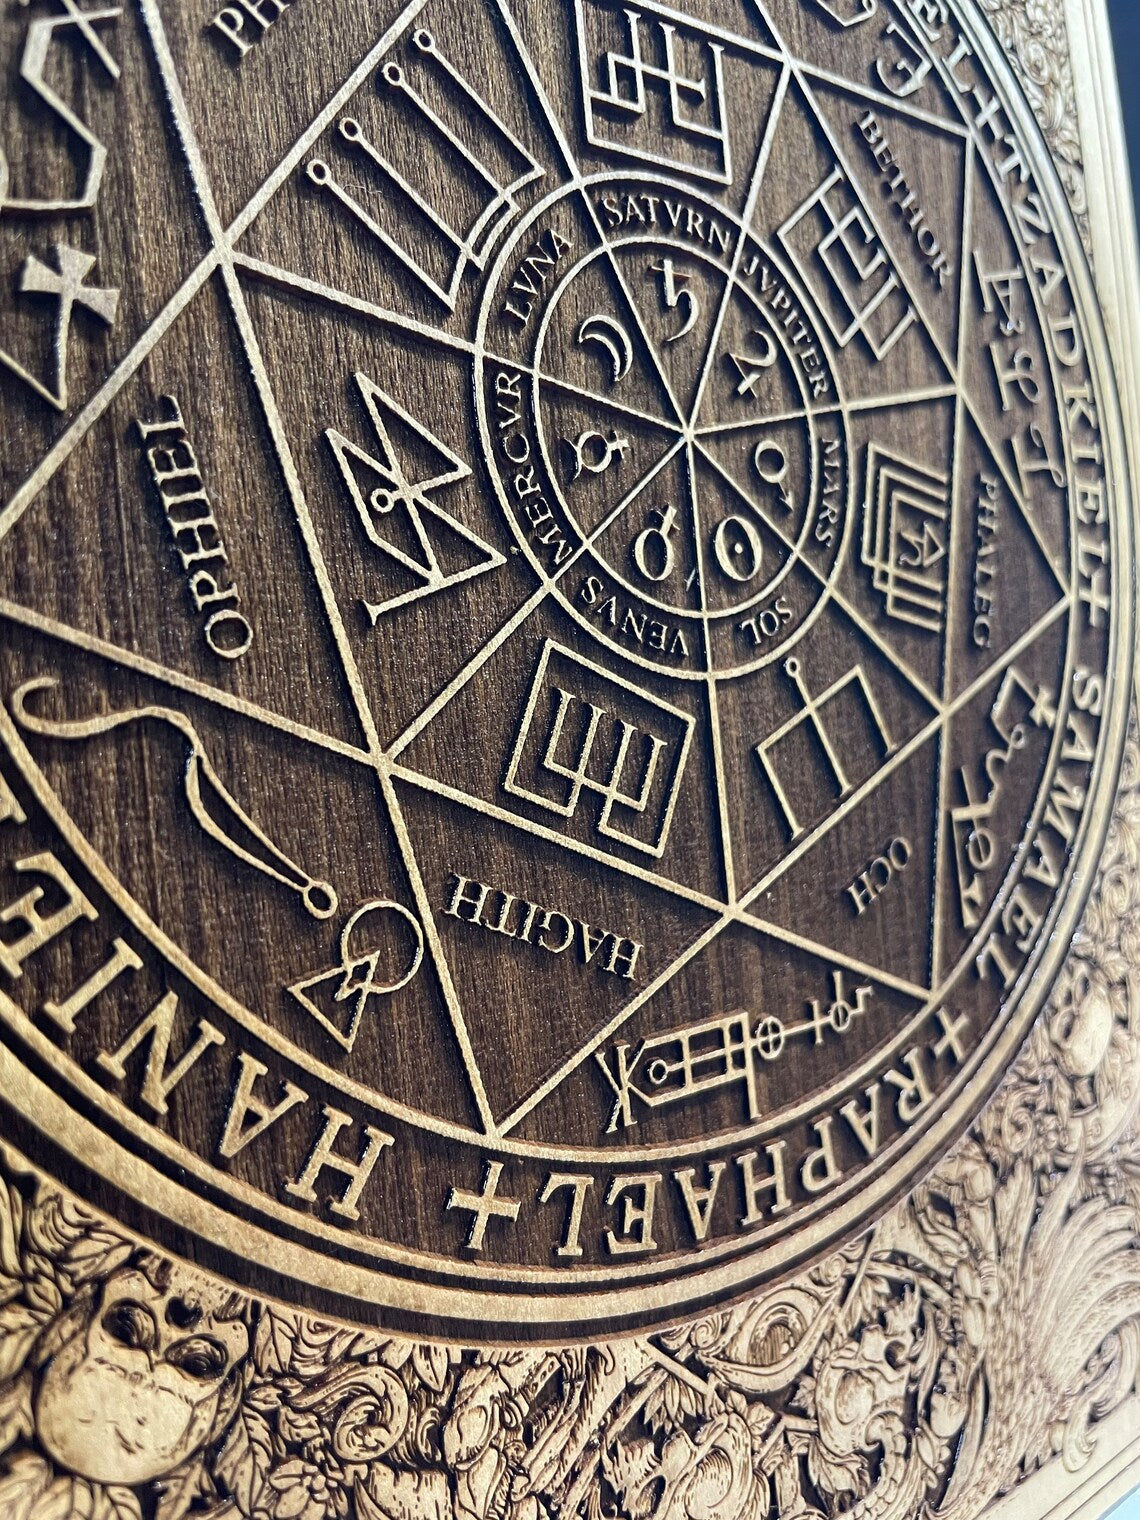 Seven Archangels seal, wood engraving, Archangel art, Magic art, Occult Wall Art, Samael, Raphael, Michael, Gabriel, gothic home decor. - Forgotten Engravings seven-archangels-seal-wood-engra